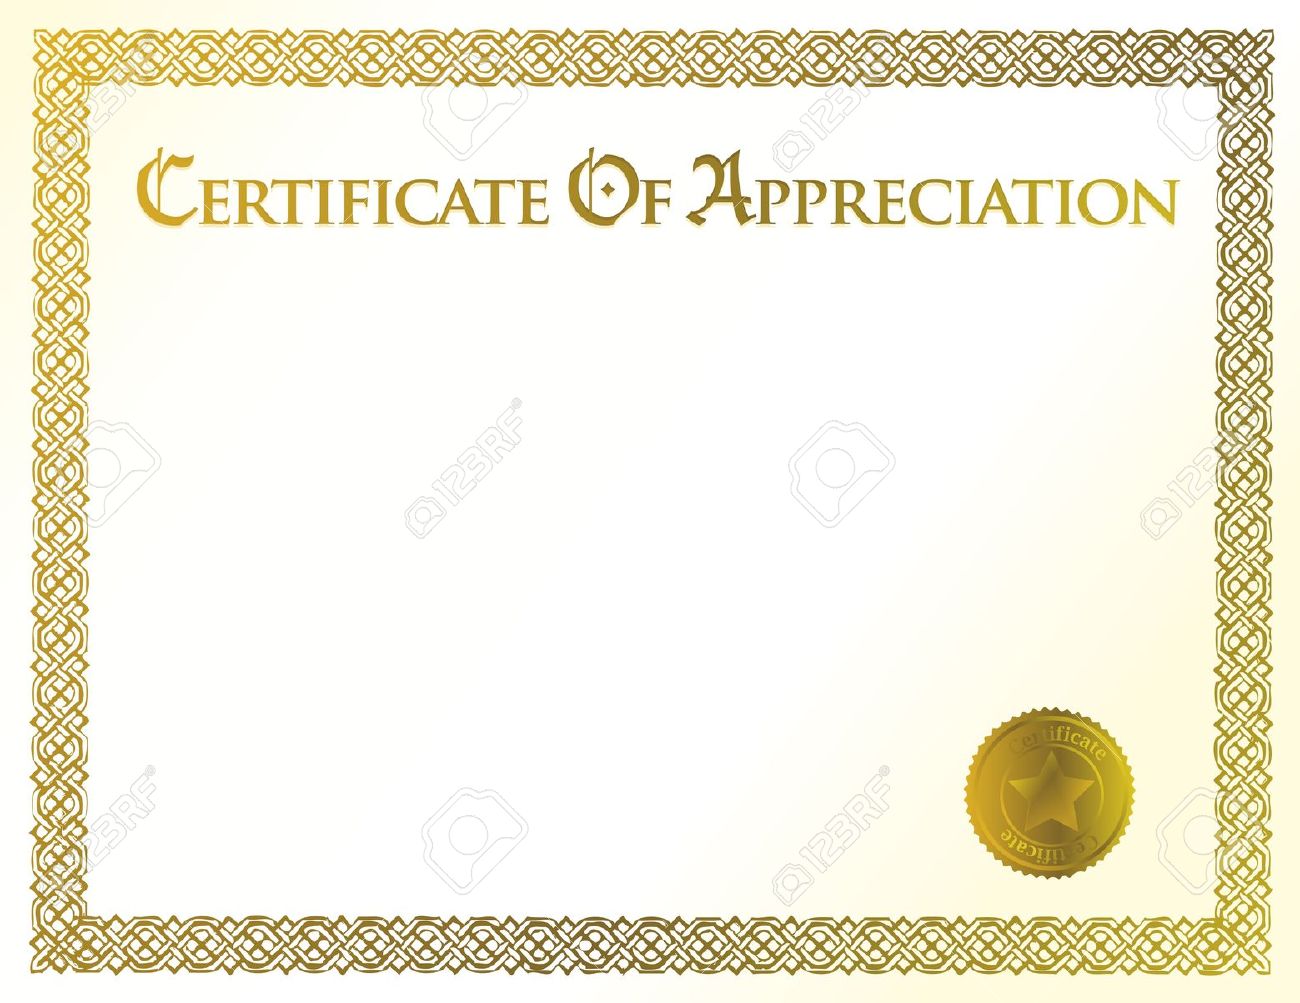 Certificate Of Appreciation Design Template Free Download Pertaining To Gratitude Certificate Template